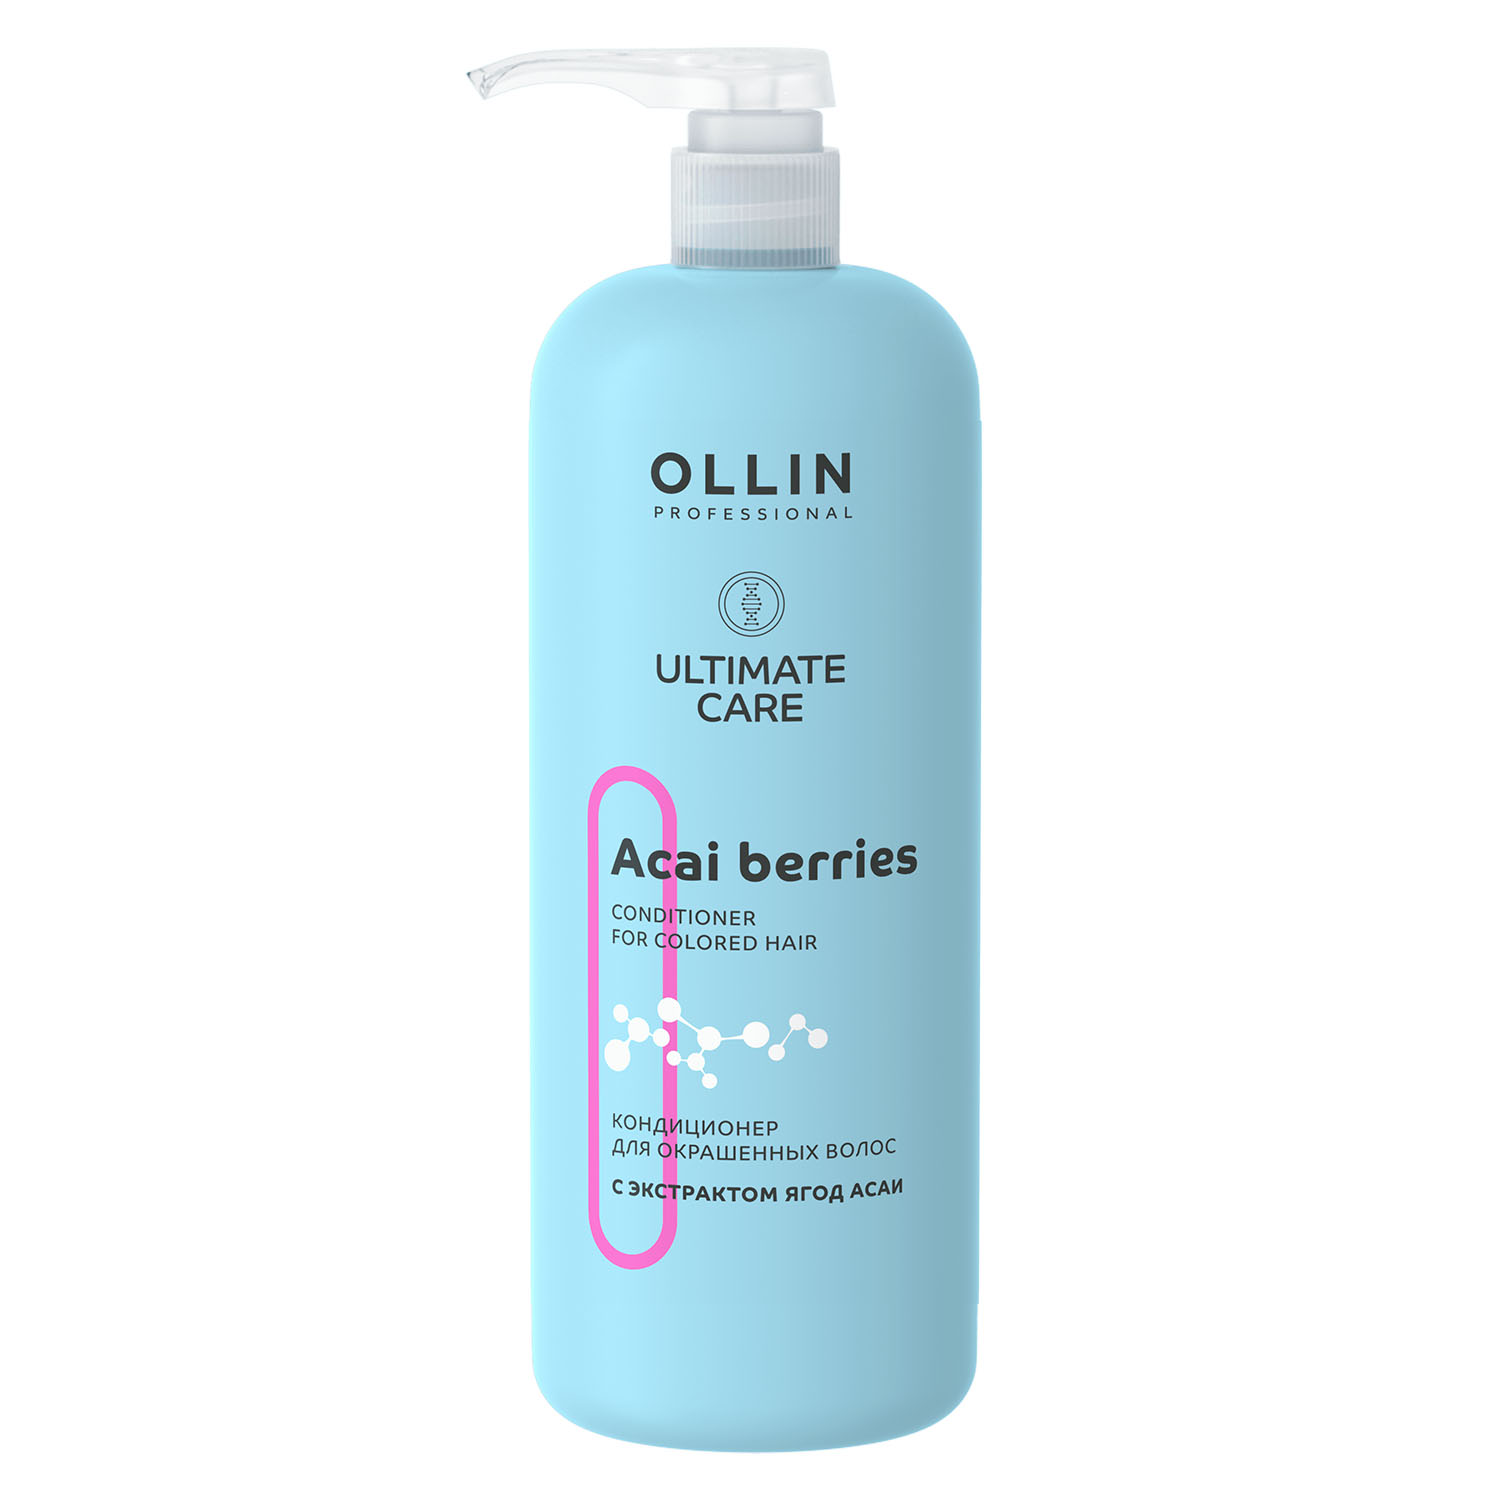 Ollin Professional Кондиционер для окрашенных волос с экстрактом ягод асаи, 1000 мл (Ollin Professional, Ultimate Care)